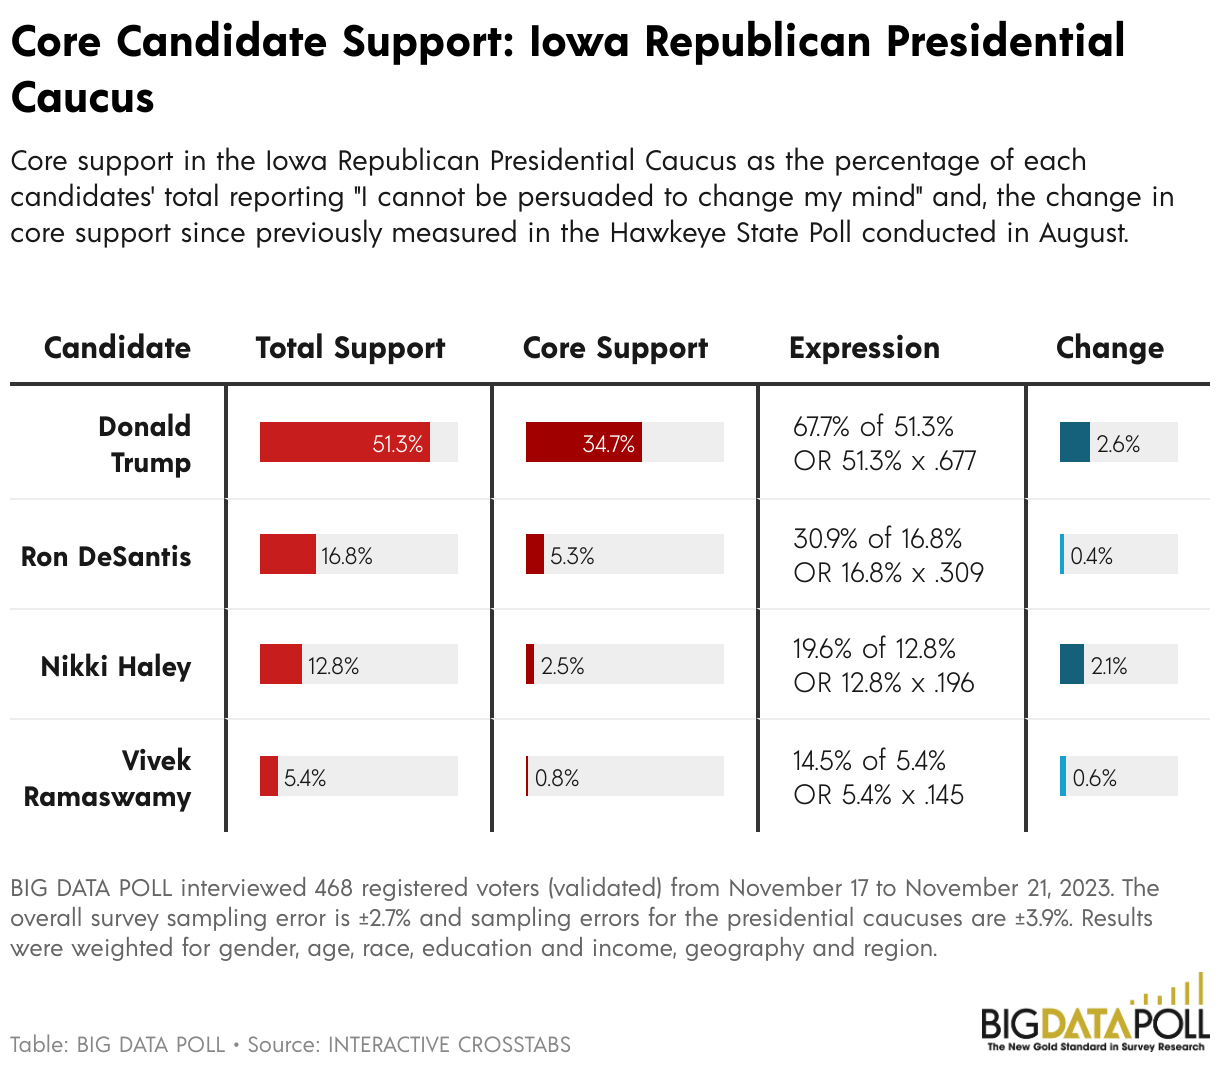 Core Candidate Support: Iowa Republican Presidential Caucus